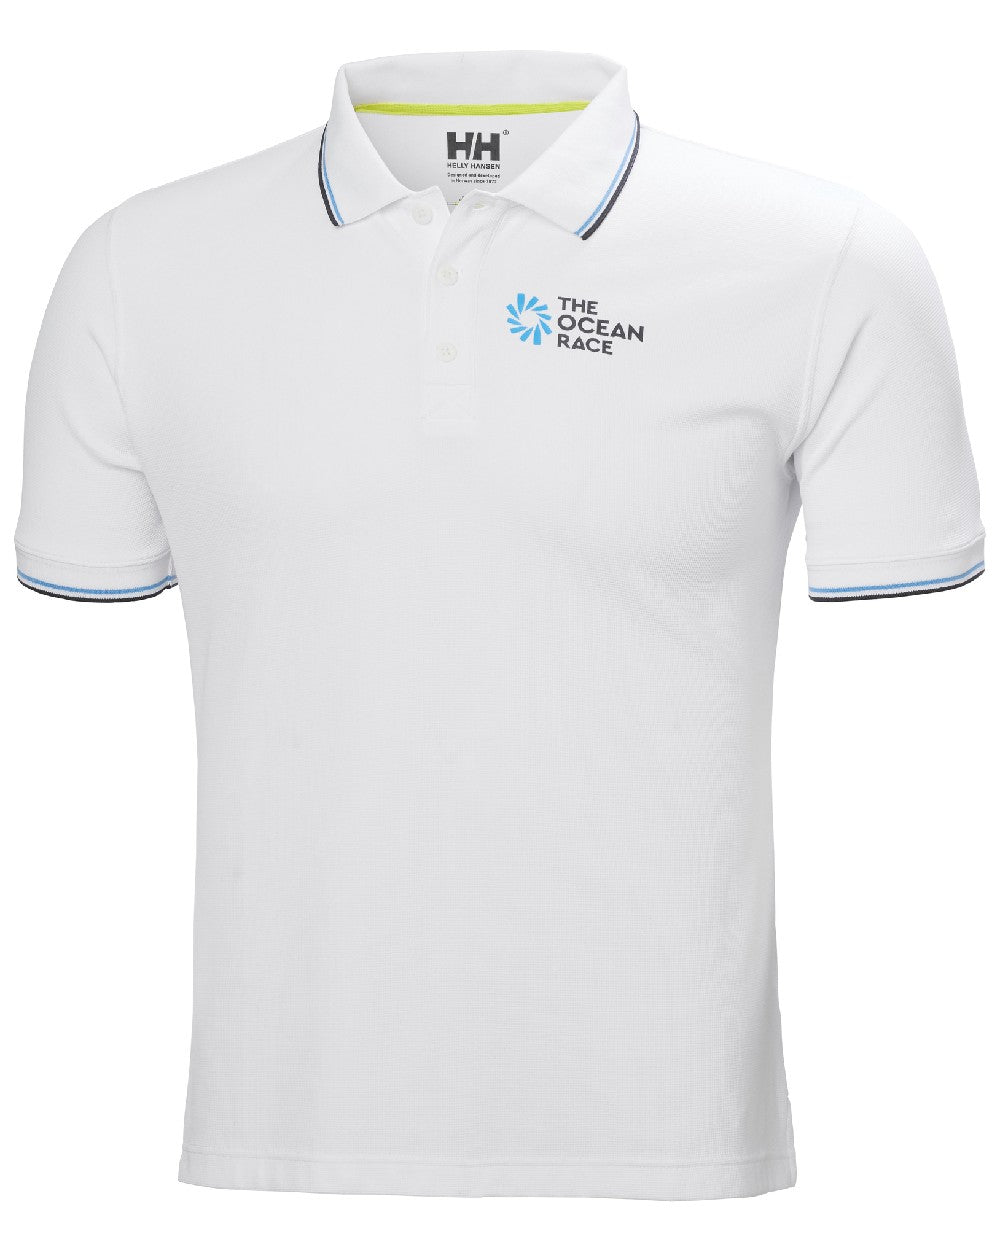 White coloured Helly Hansen Womens Ocean Race Polo Shirt on white background 